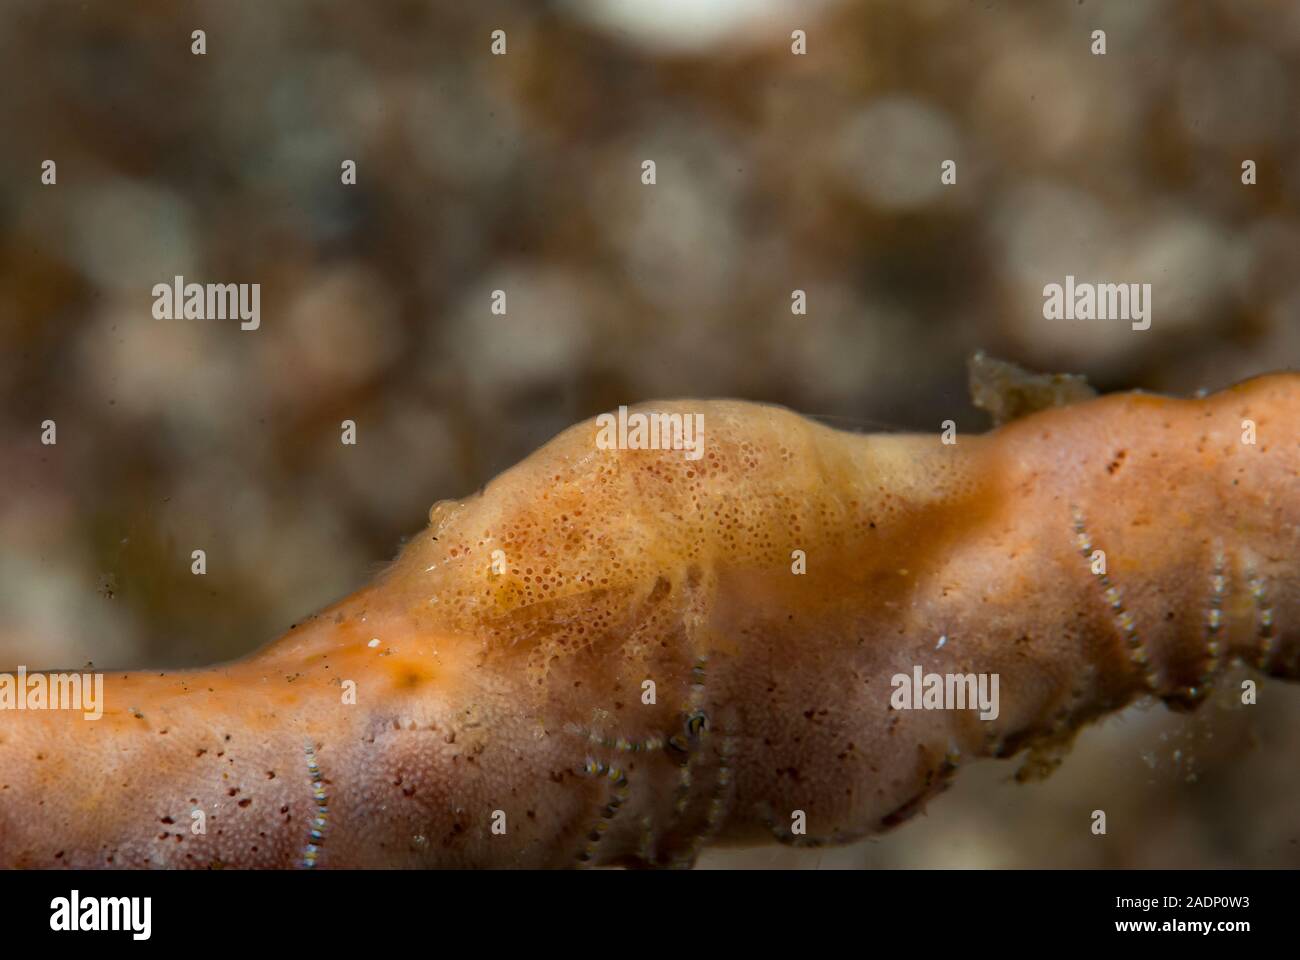 Paron Shrimp Gelastocaris paronae Stock Photo